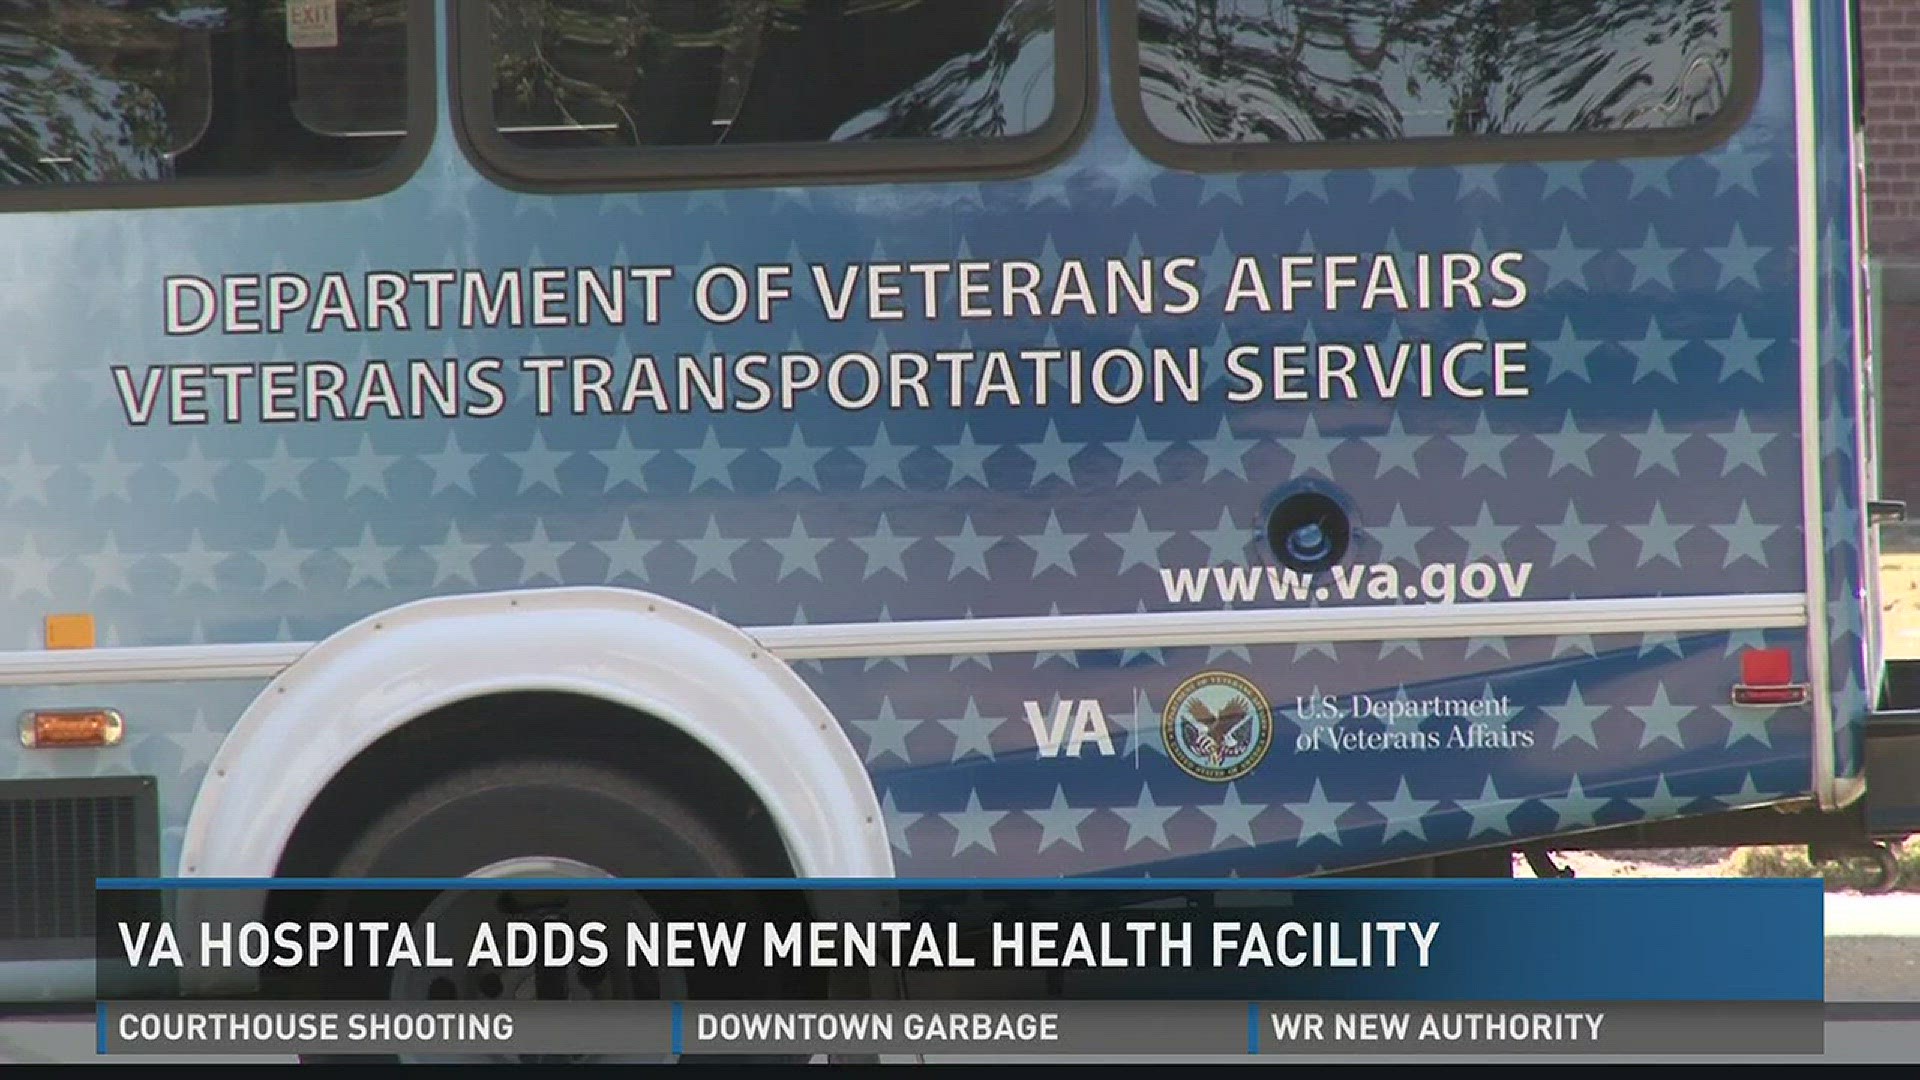 Dublin VA adds new mental health facility